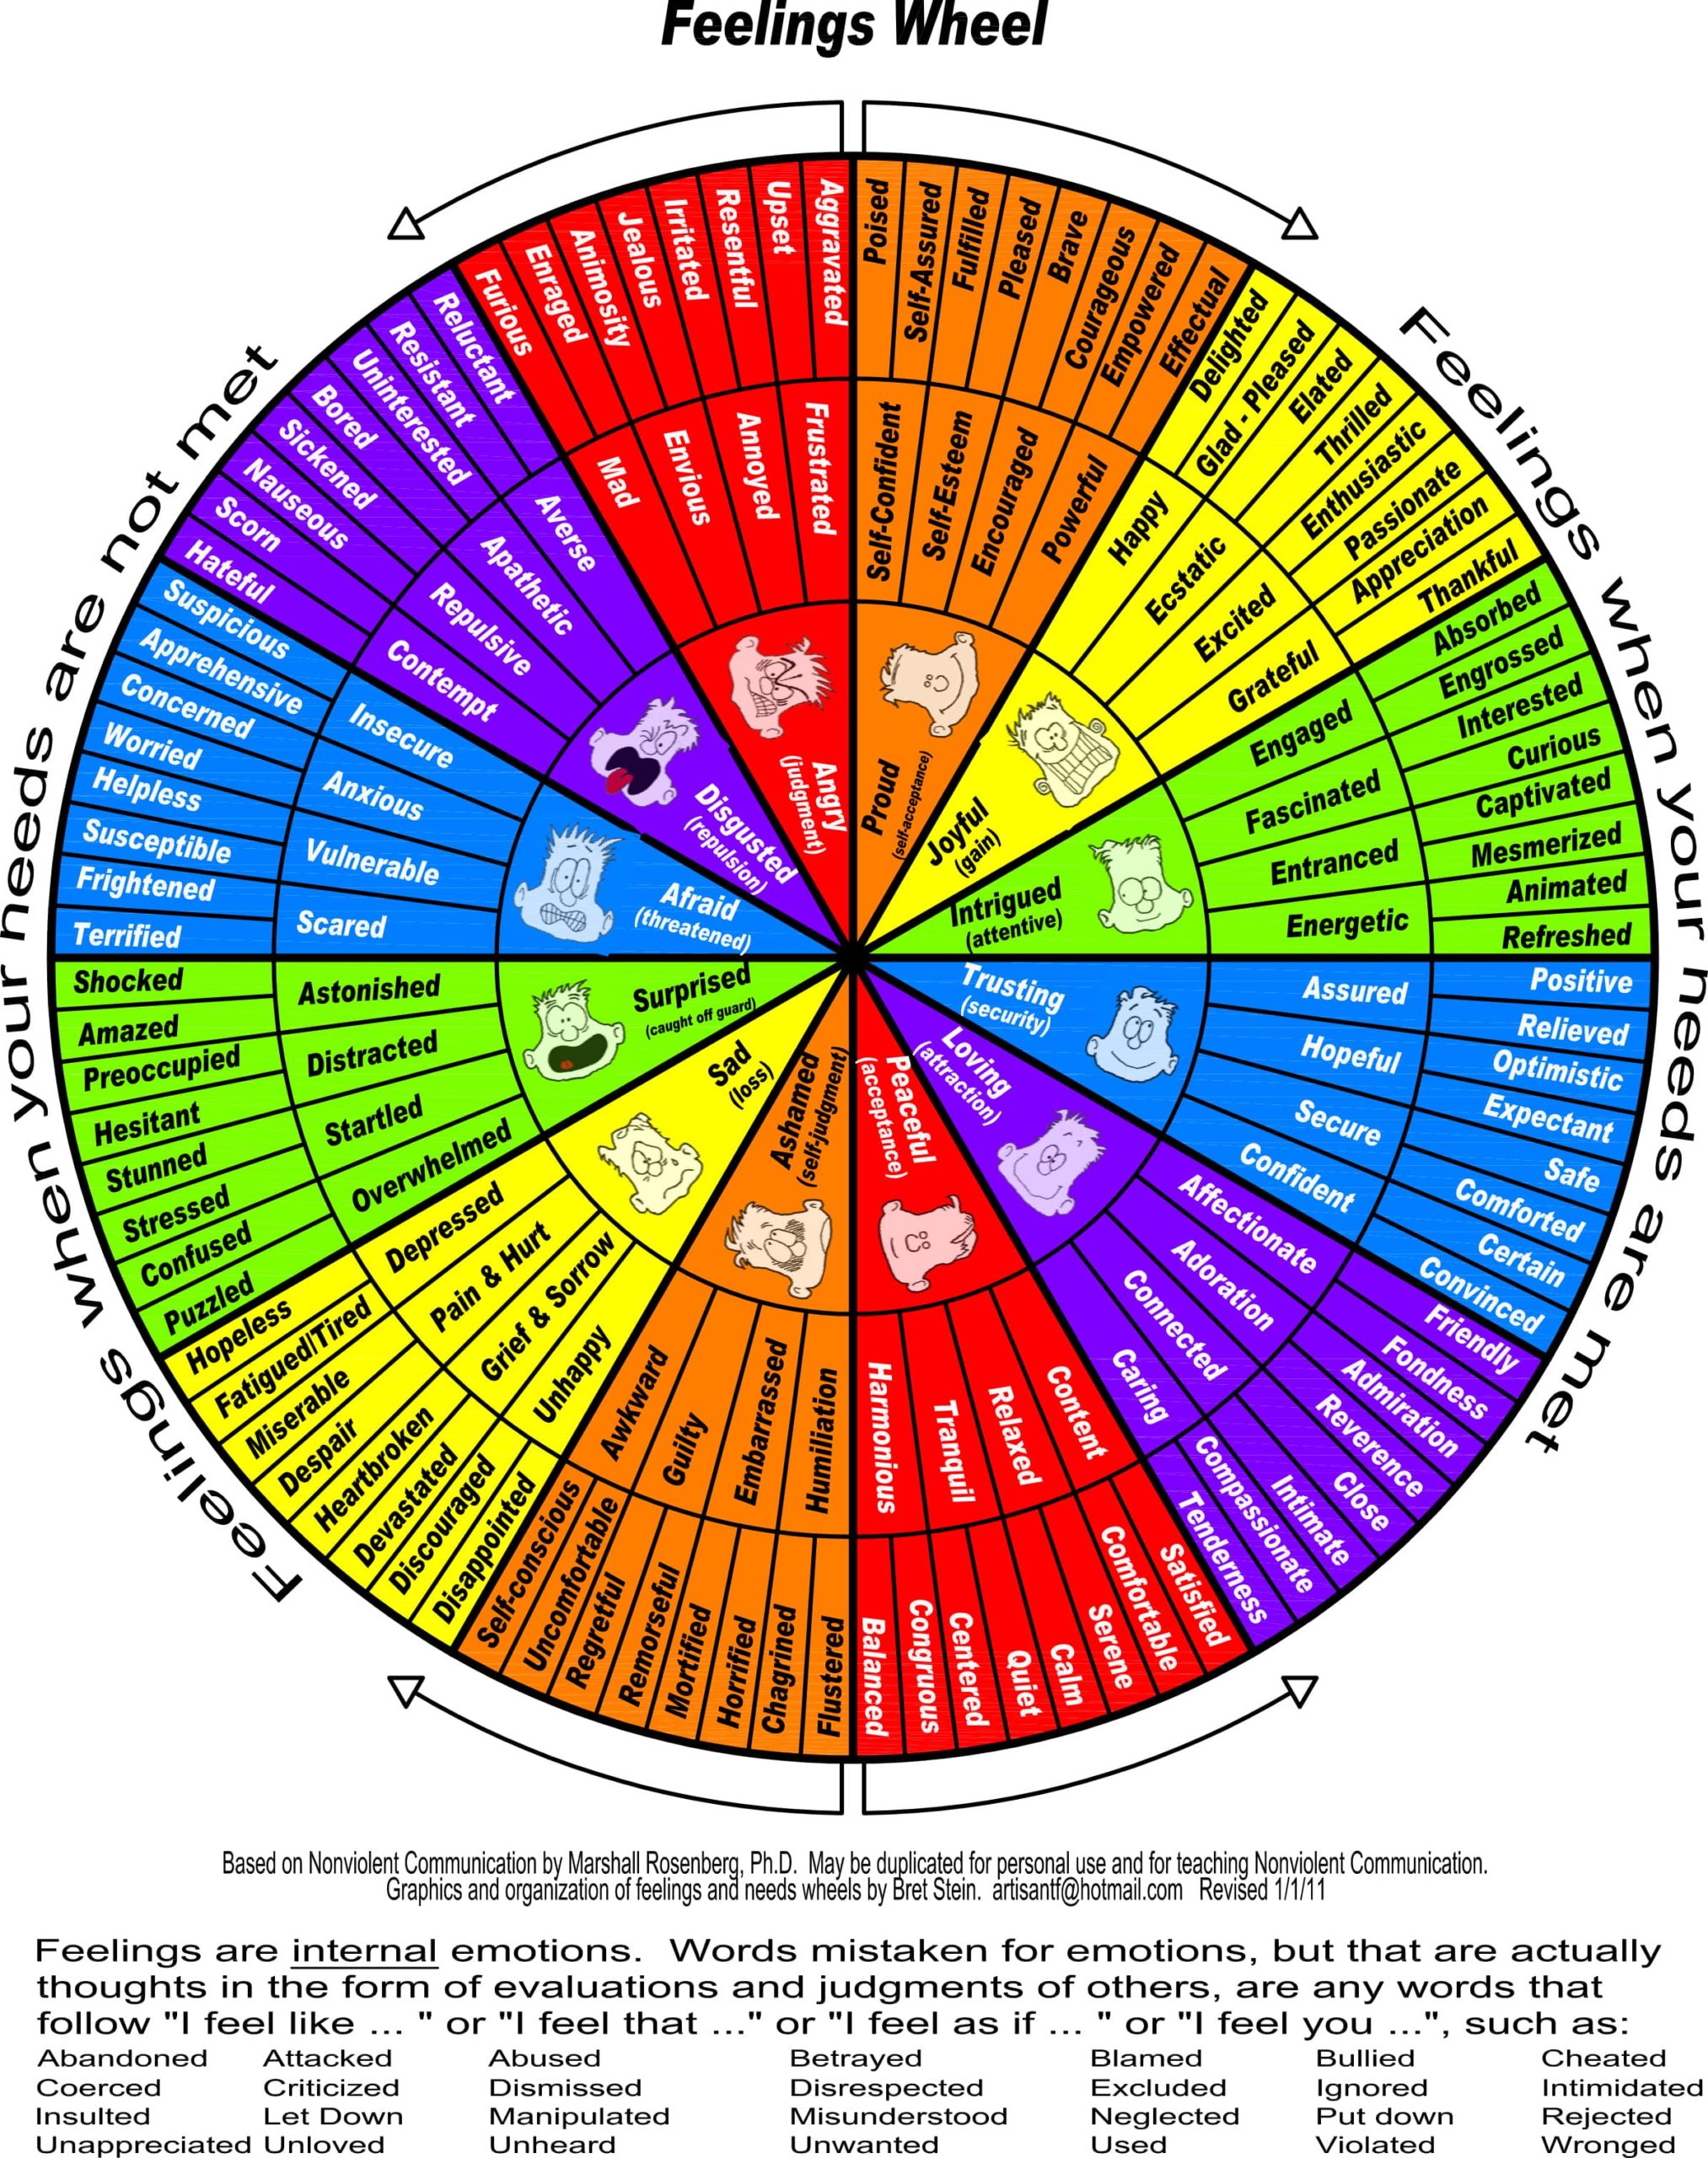 Nonviolent Communications Method feelings wheel